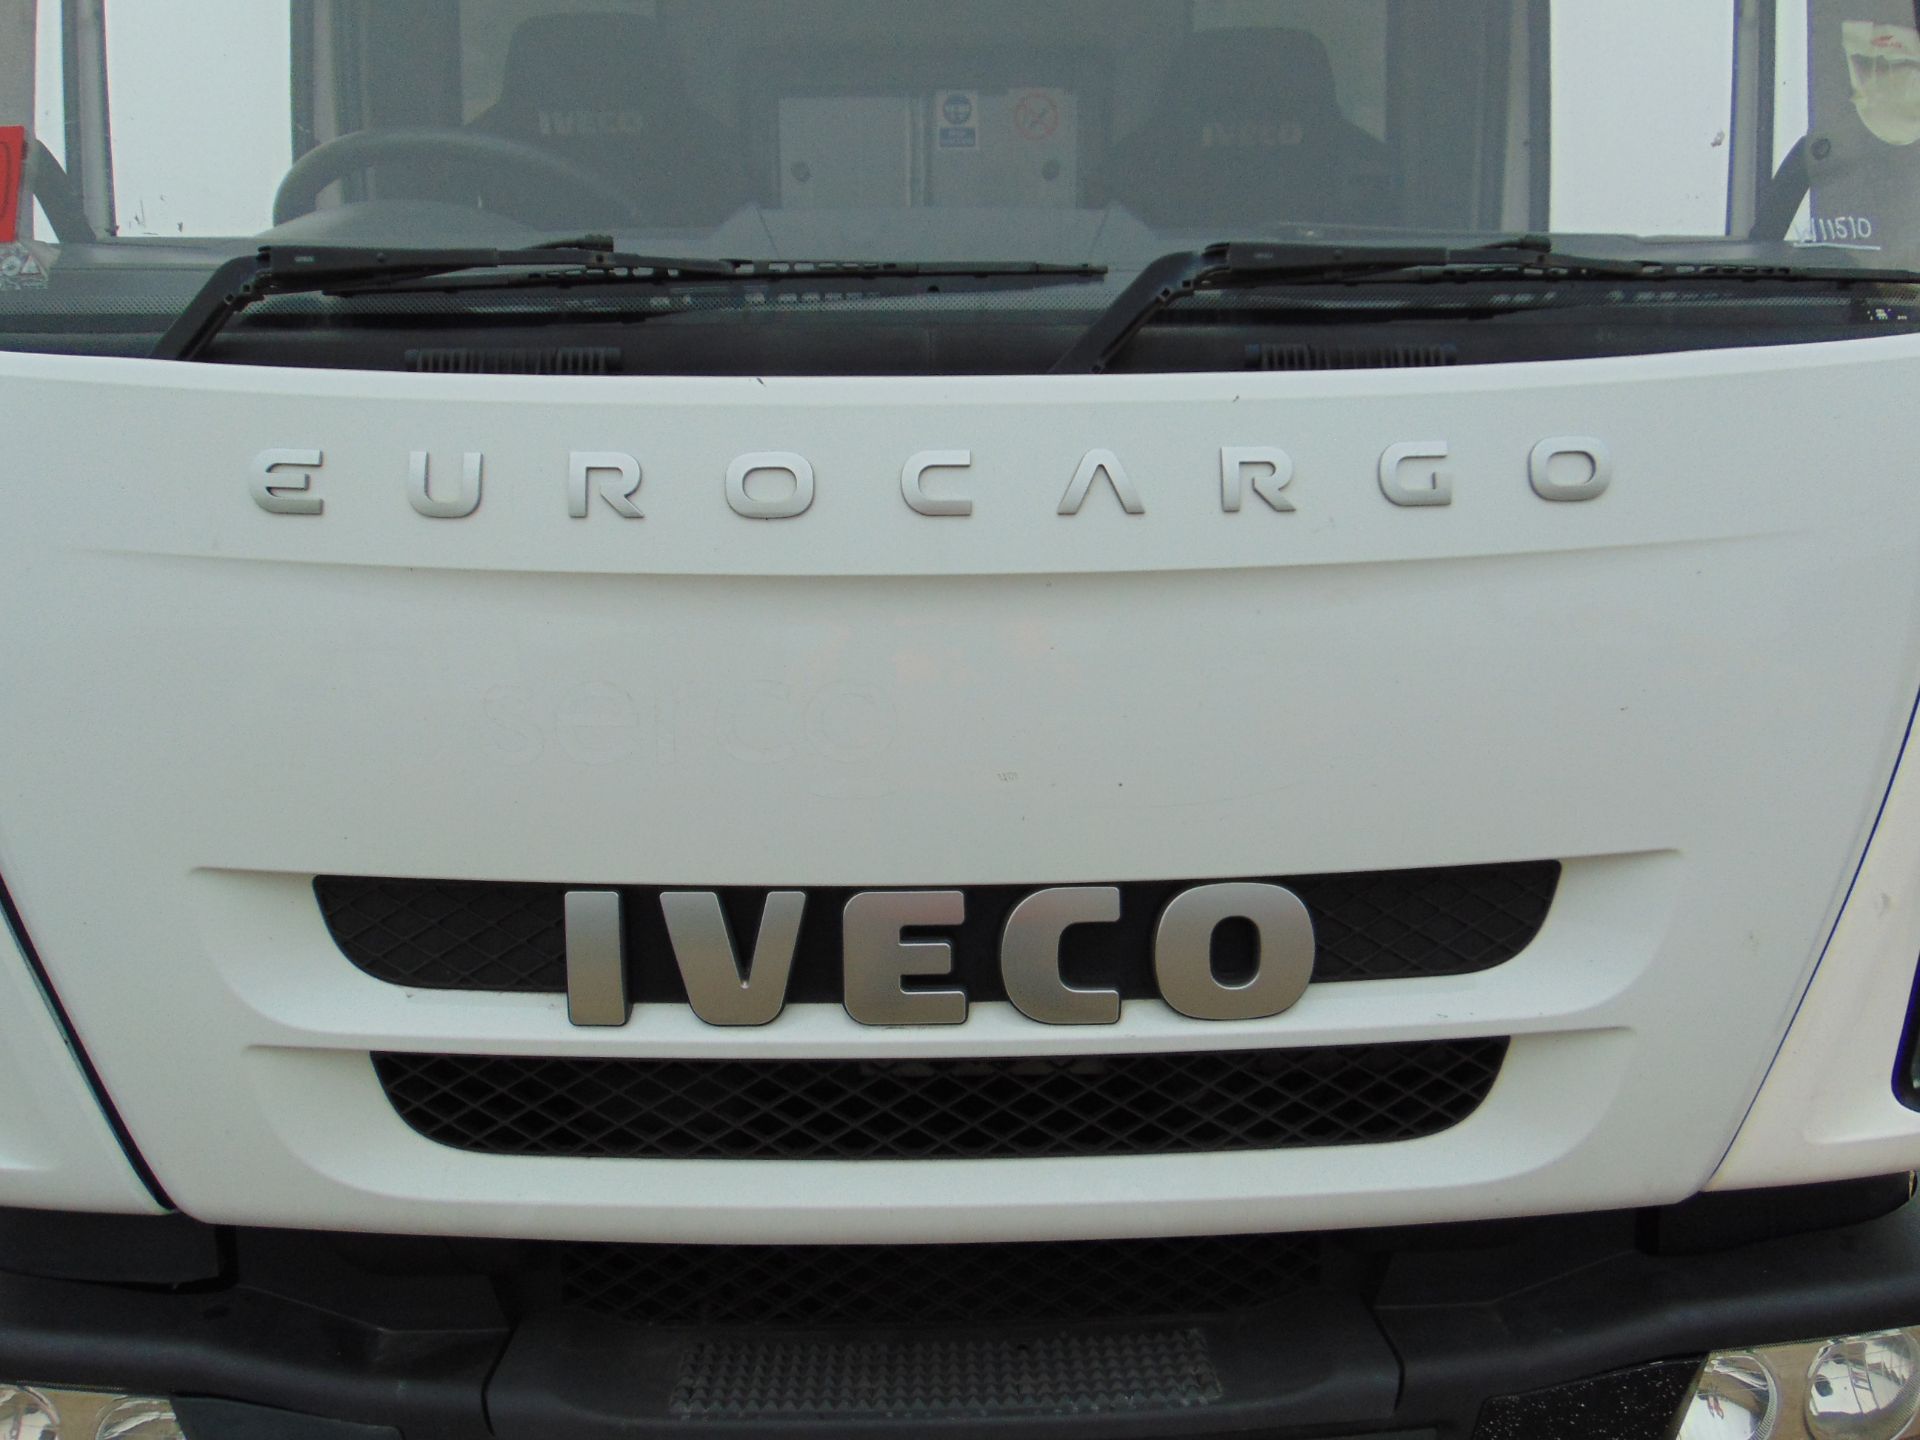 2011 Iveco Eurocargo 100E18 Day Cab Box Van 4x2 3.9L Diesel - Prison/Secure Transport Vehicle - Image 19 of 28